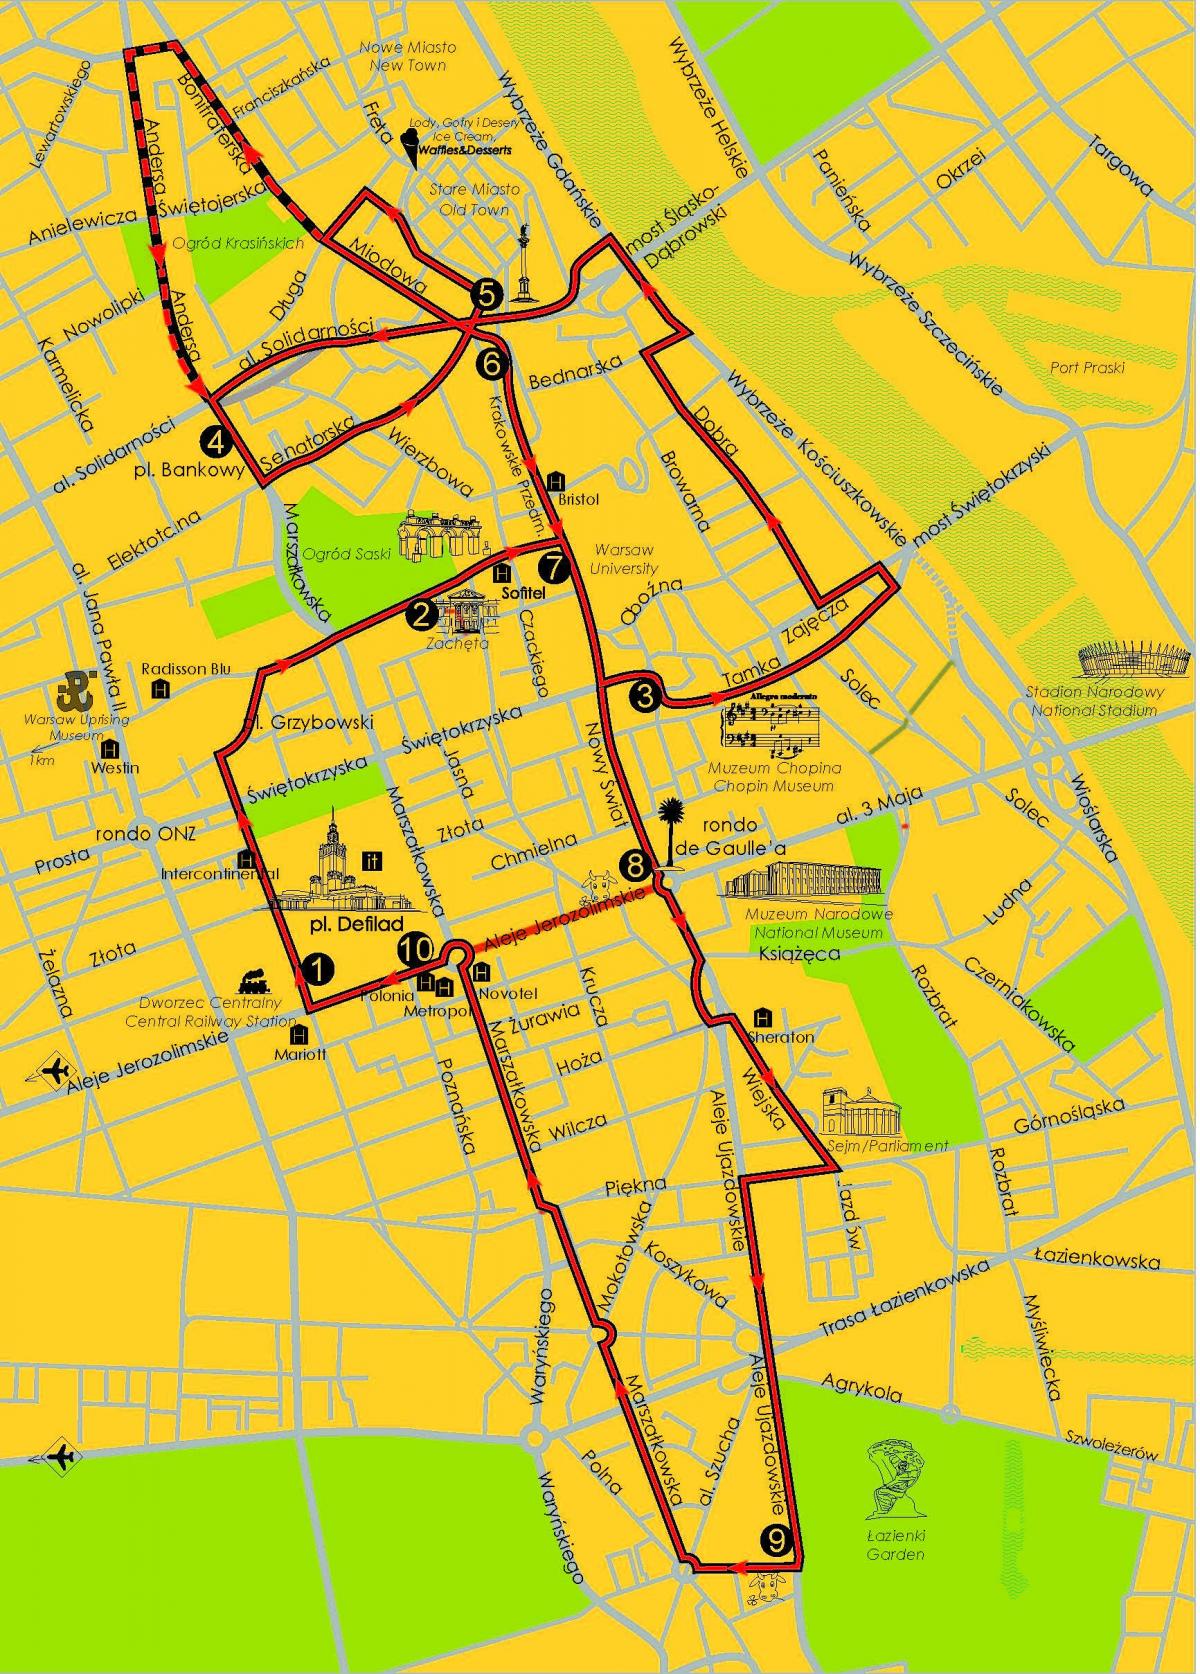 Mapa de Varsovia bus hop on hop off 